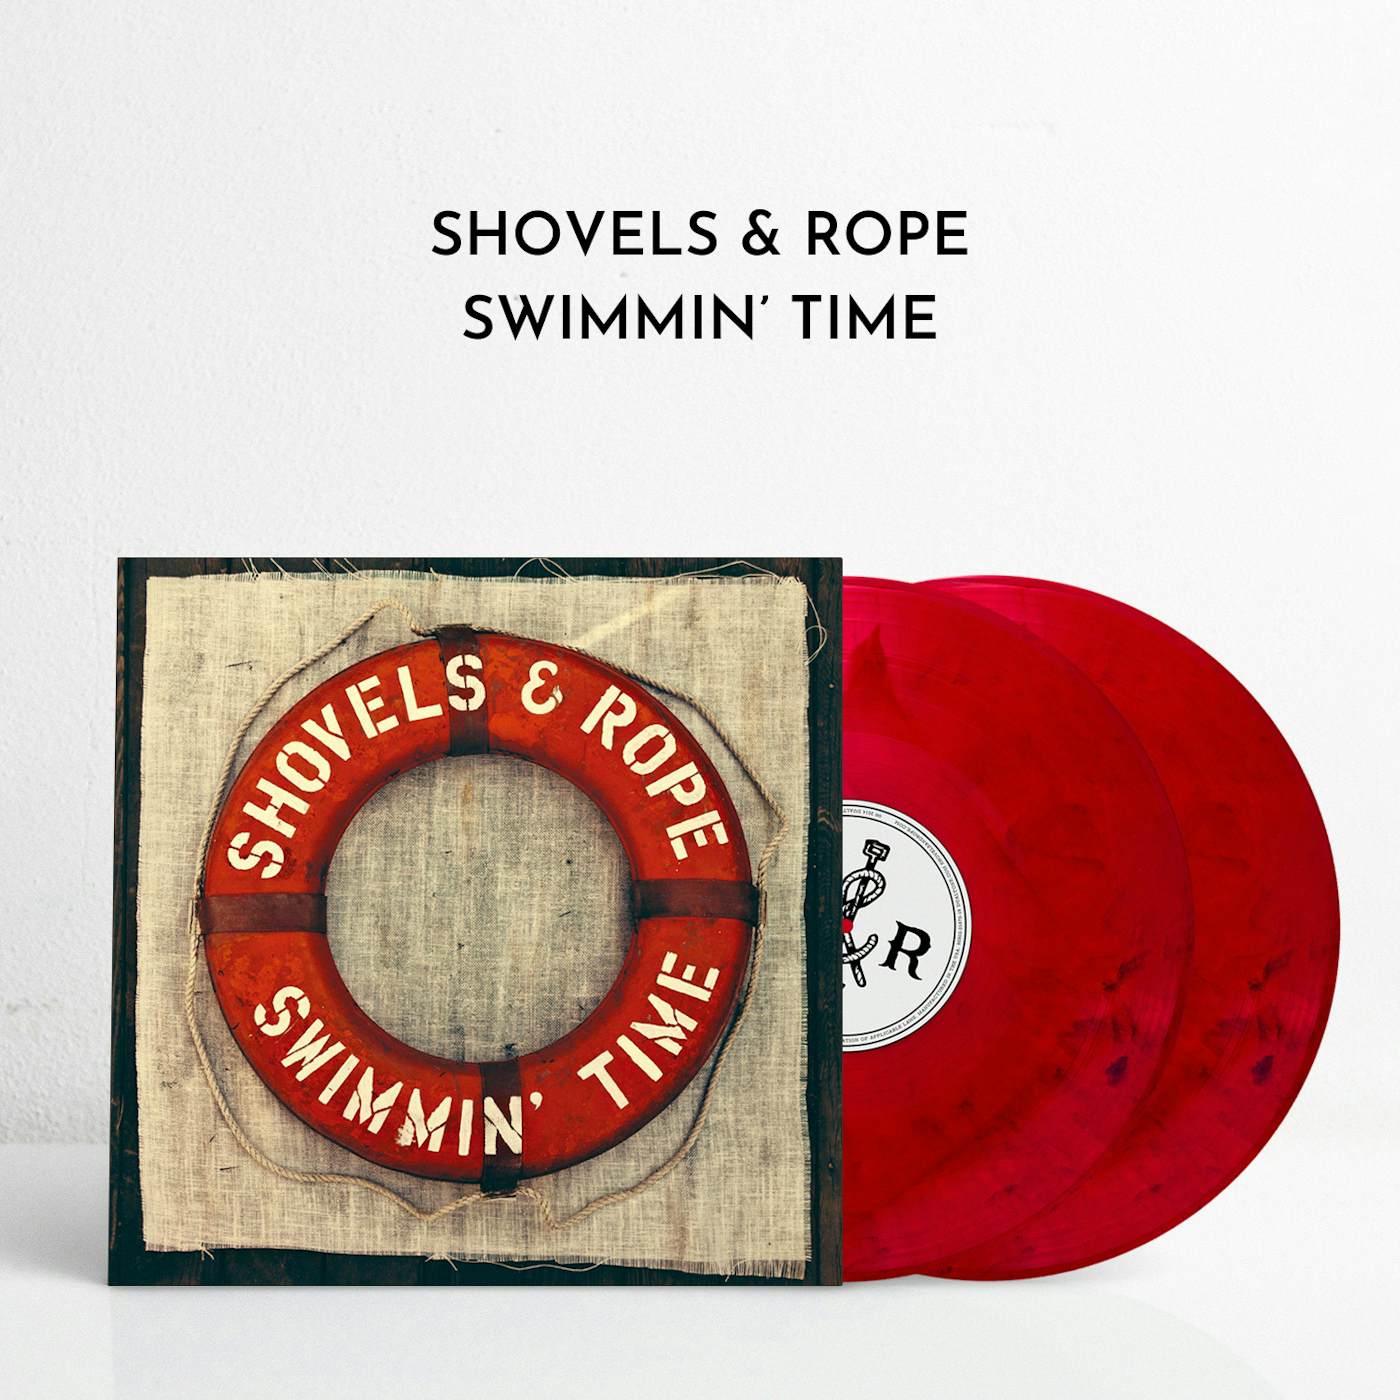 Shovels & Rope Swimmin' Time (Ltd. Edition Vinyl)